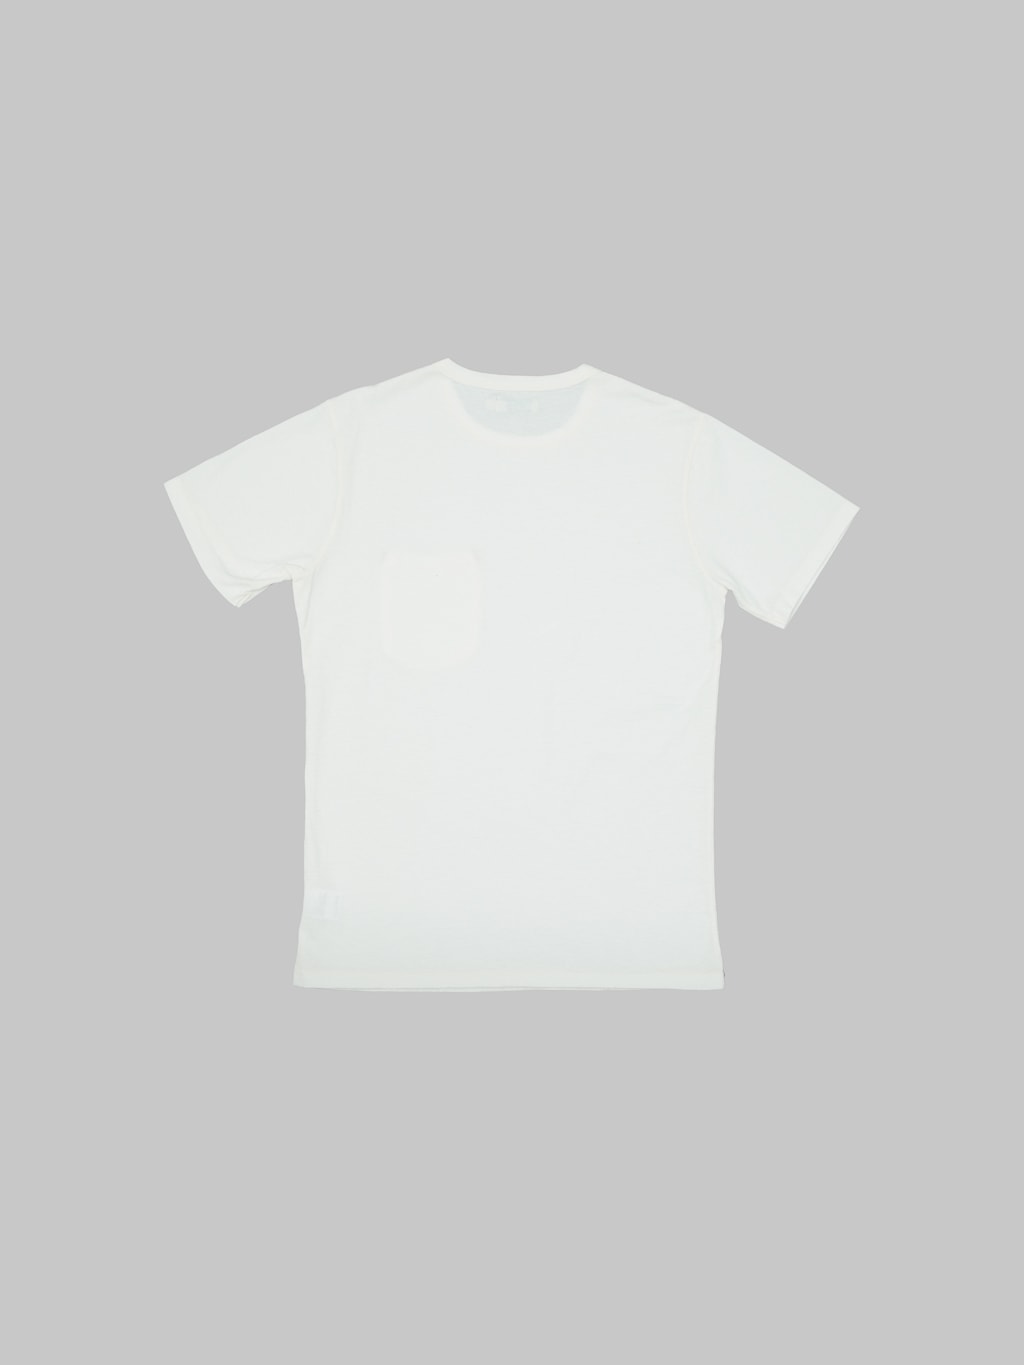 freenote cloth 9 ounce pocket t shirt white 100 cotton